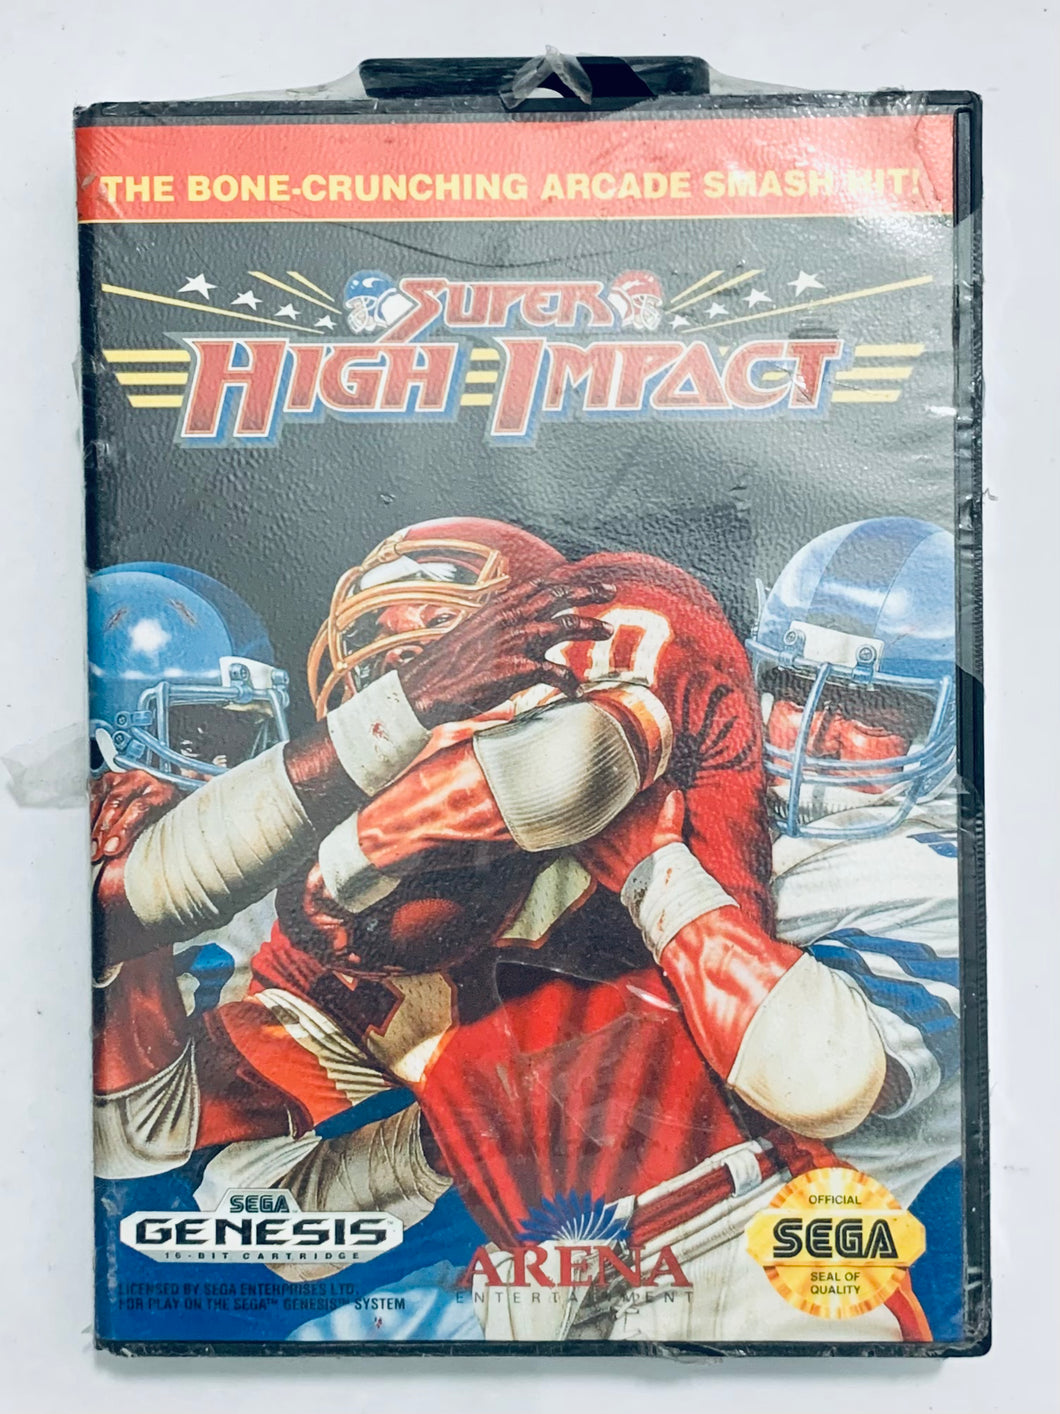 Super High Impact - Sega Genesis - NTSC - Brand New (T-81146)